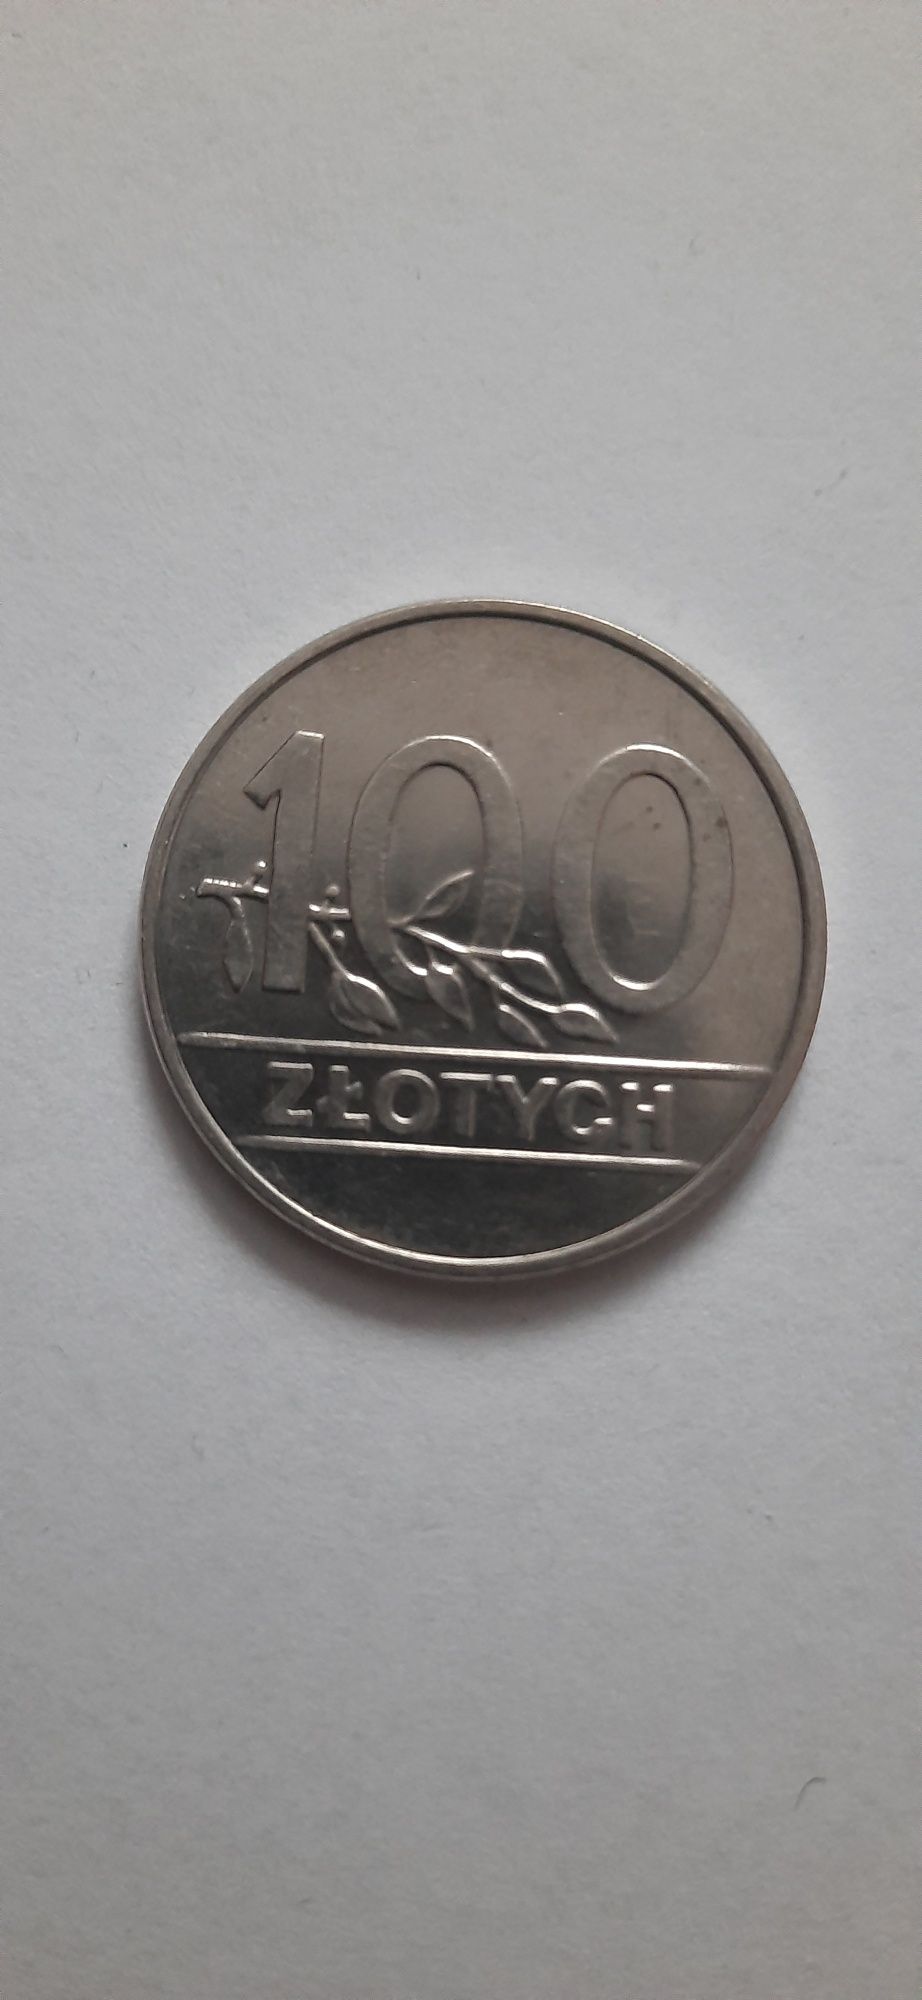 Moneta 100 zł 1990r.